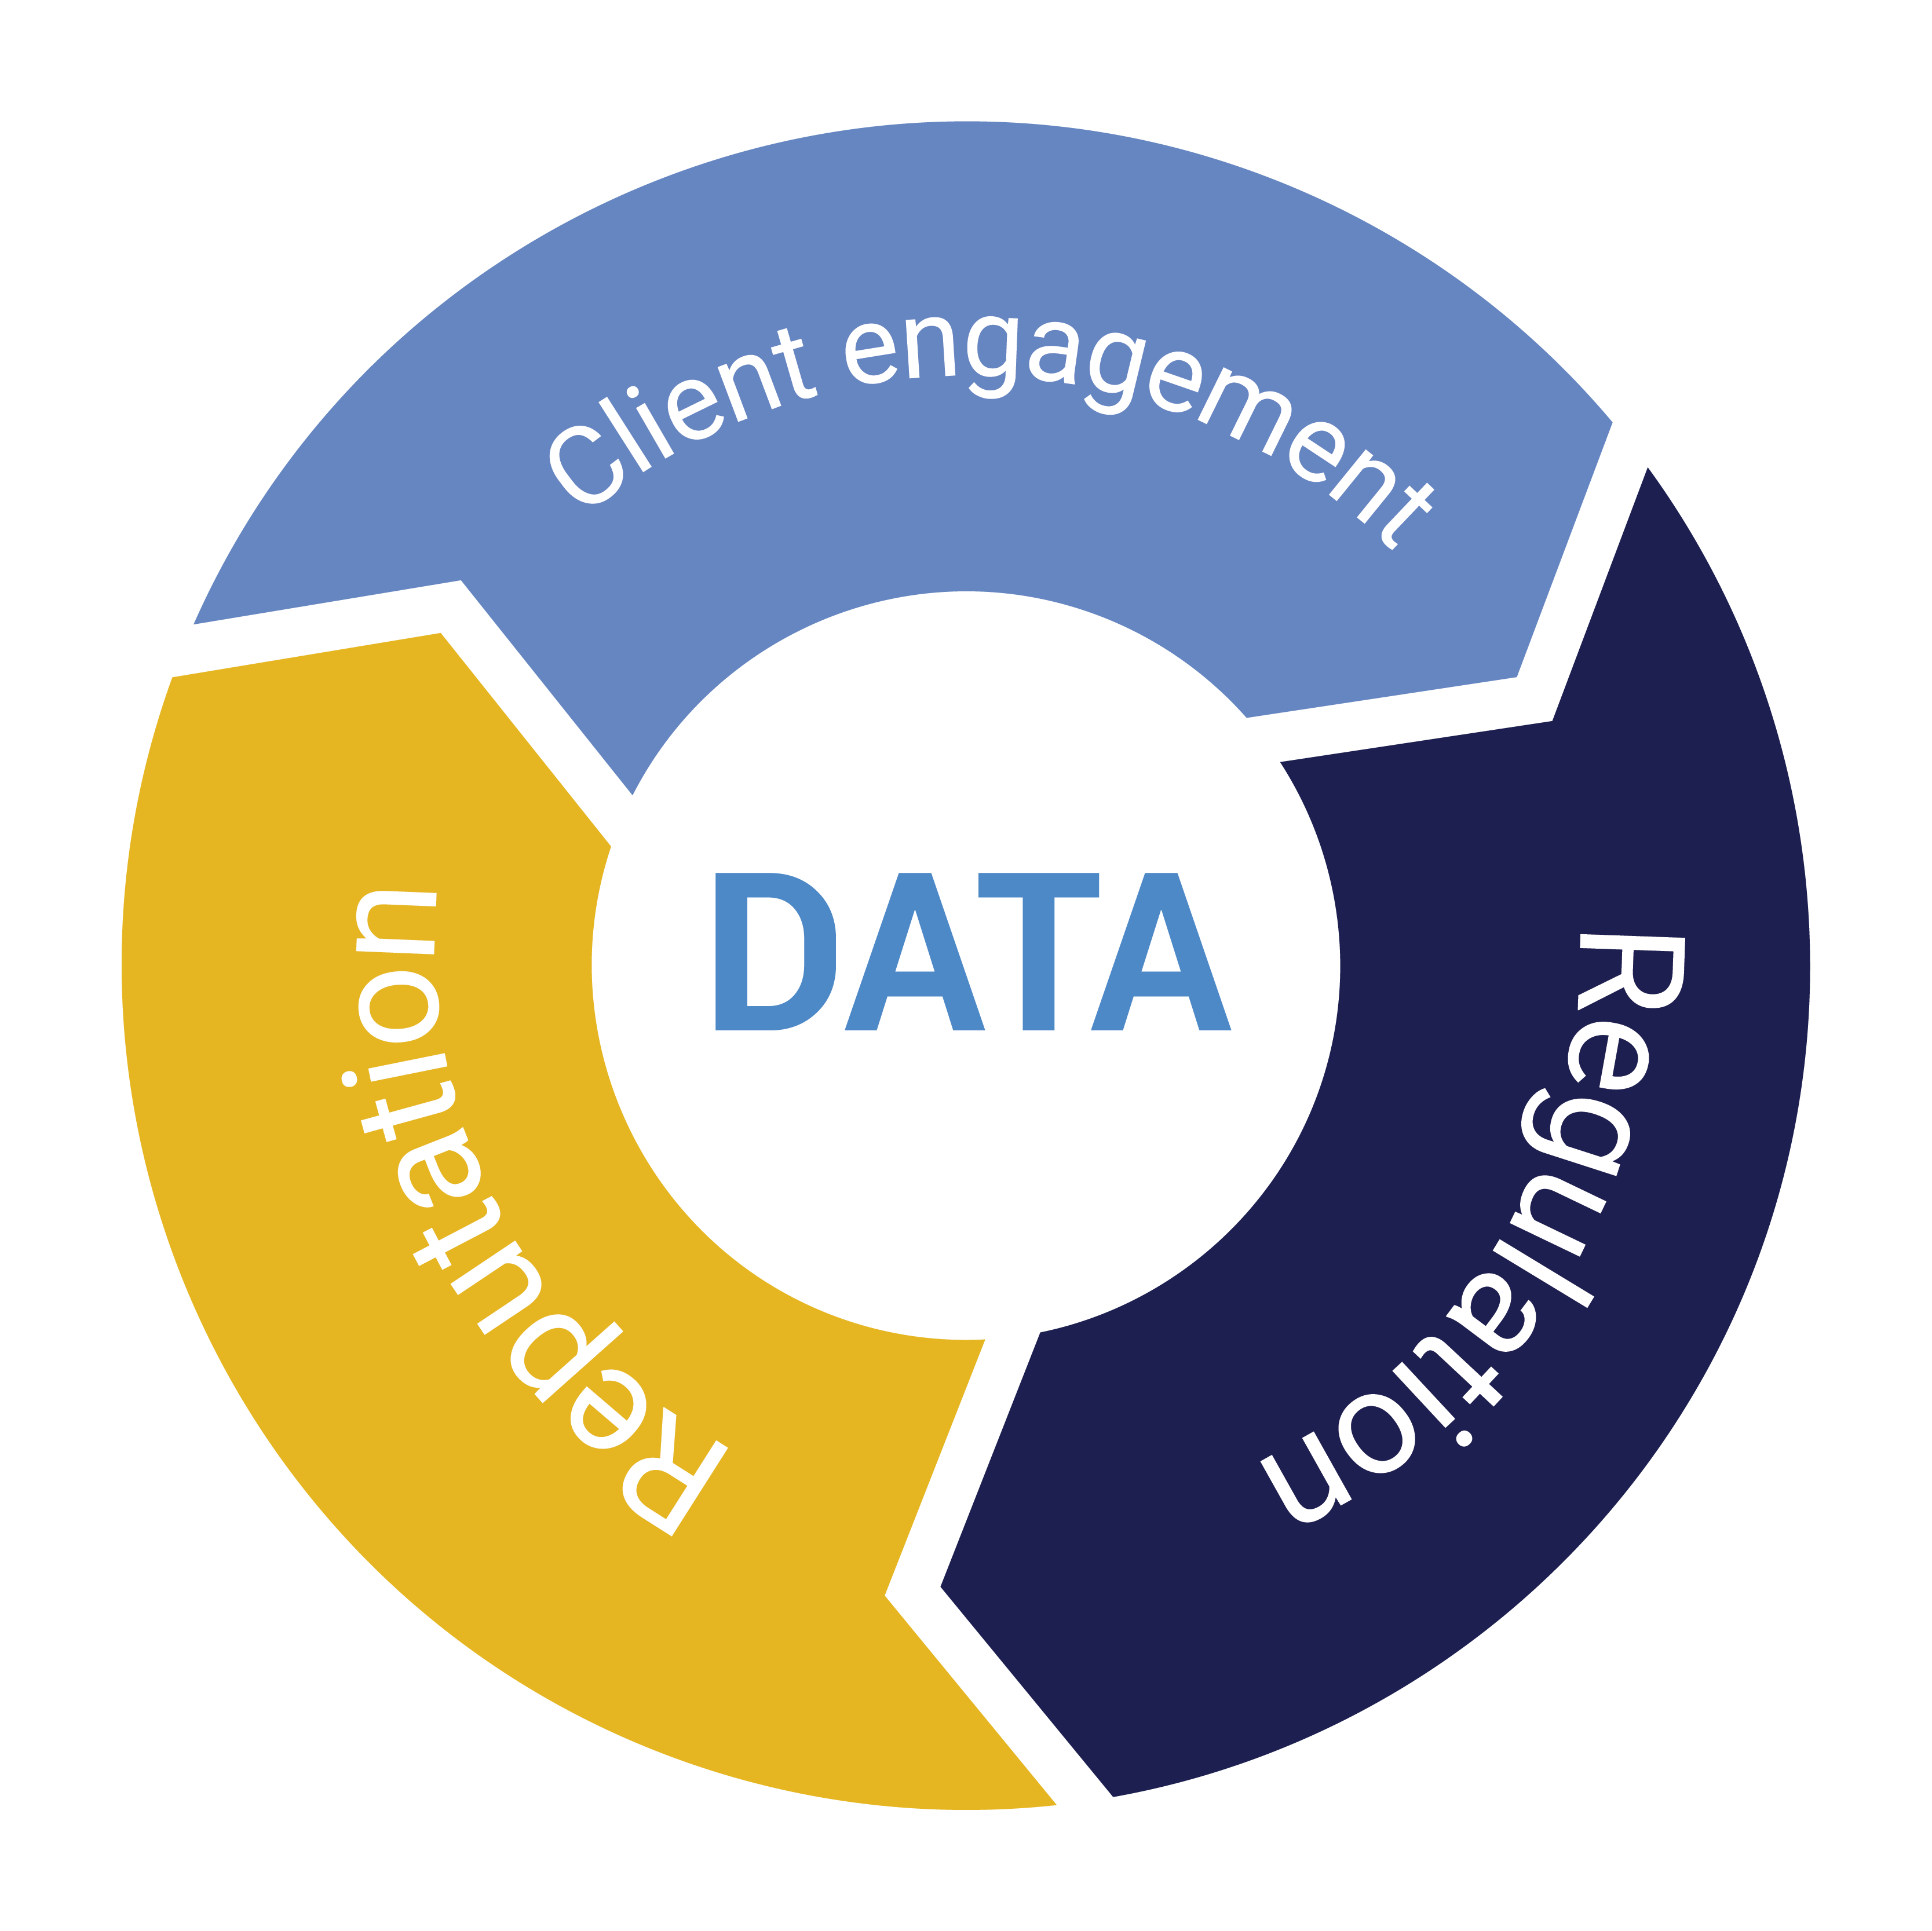 Client engagement, regulation, reputation cycle